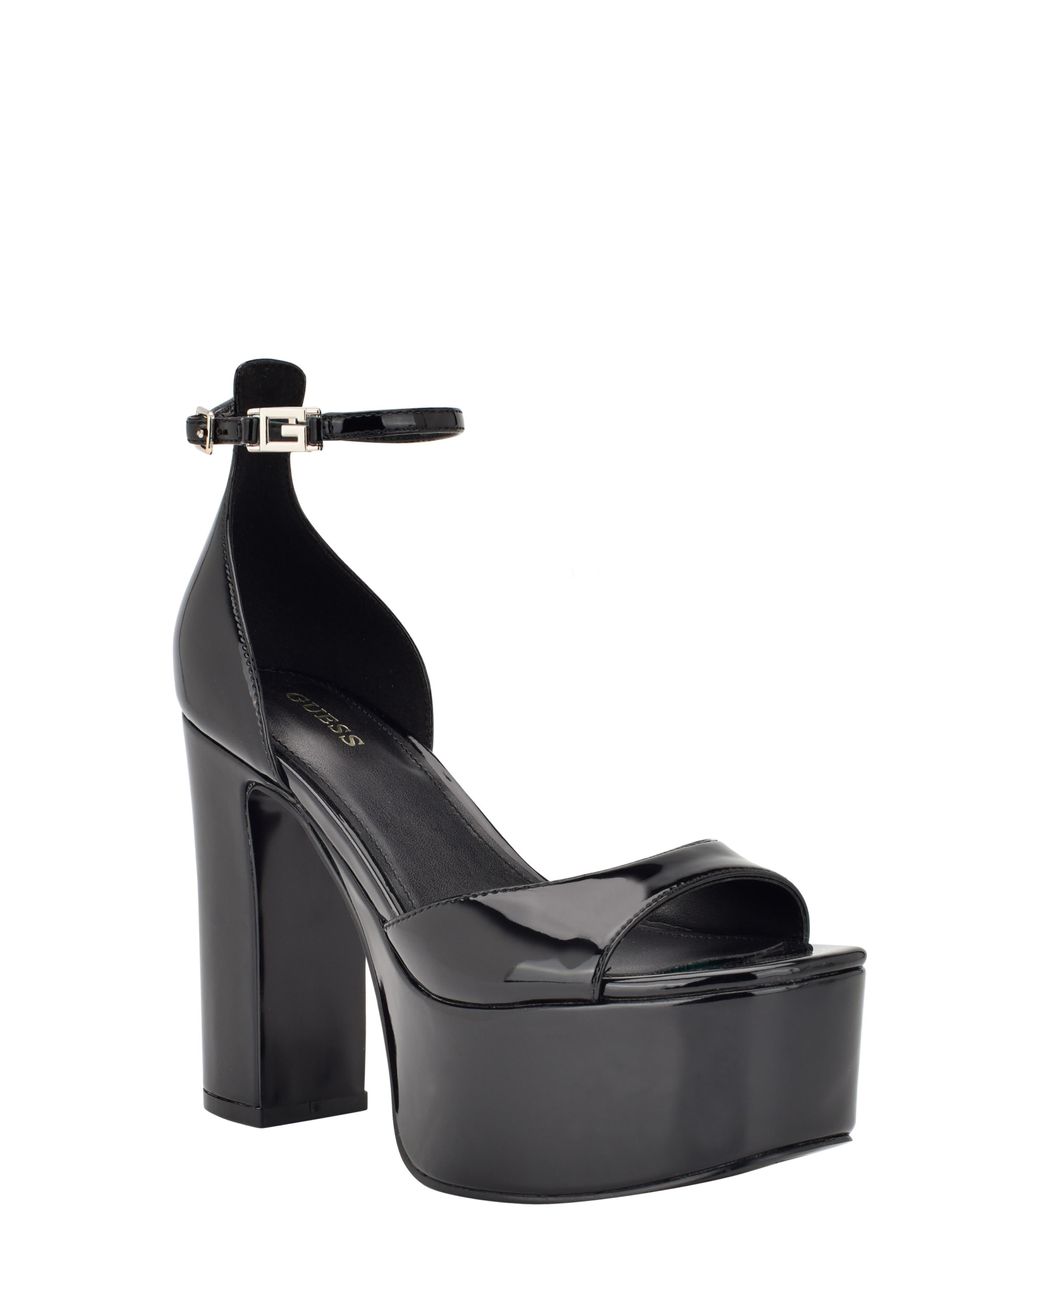 Guess Selima Ankle Strap Platform Sandal in Black | Lyst